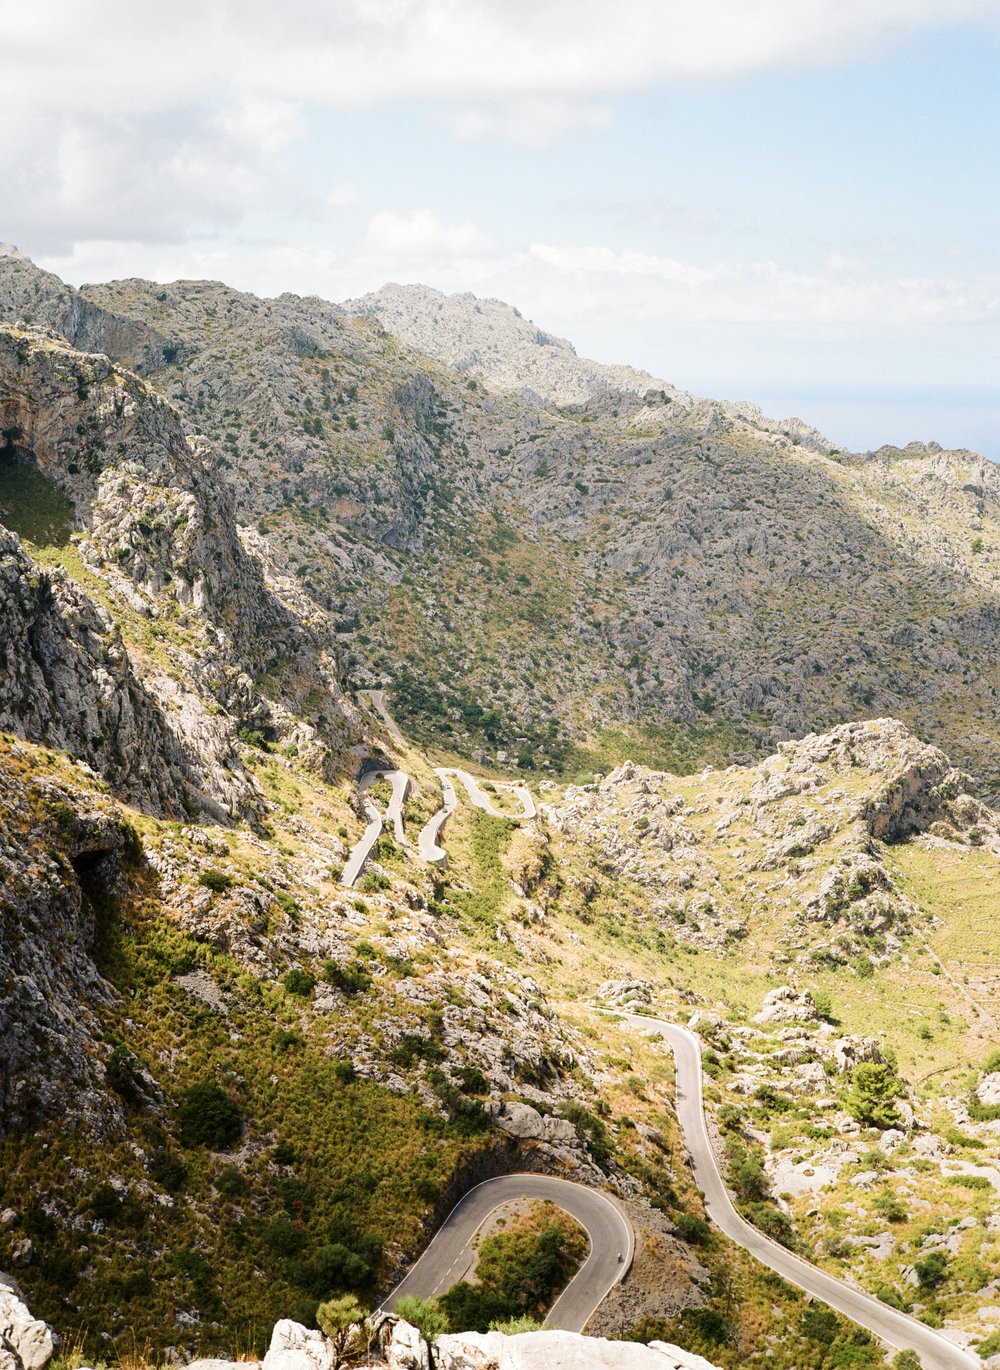  looking down the mountain roads of Mallorca, Spain taken on film 